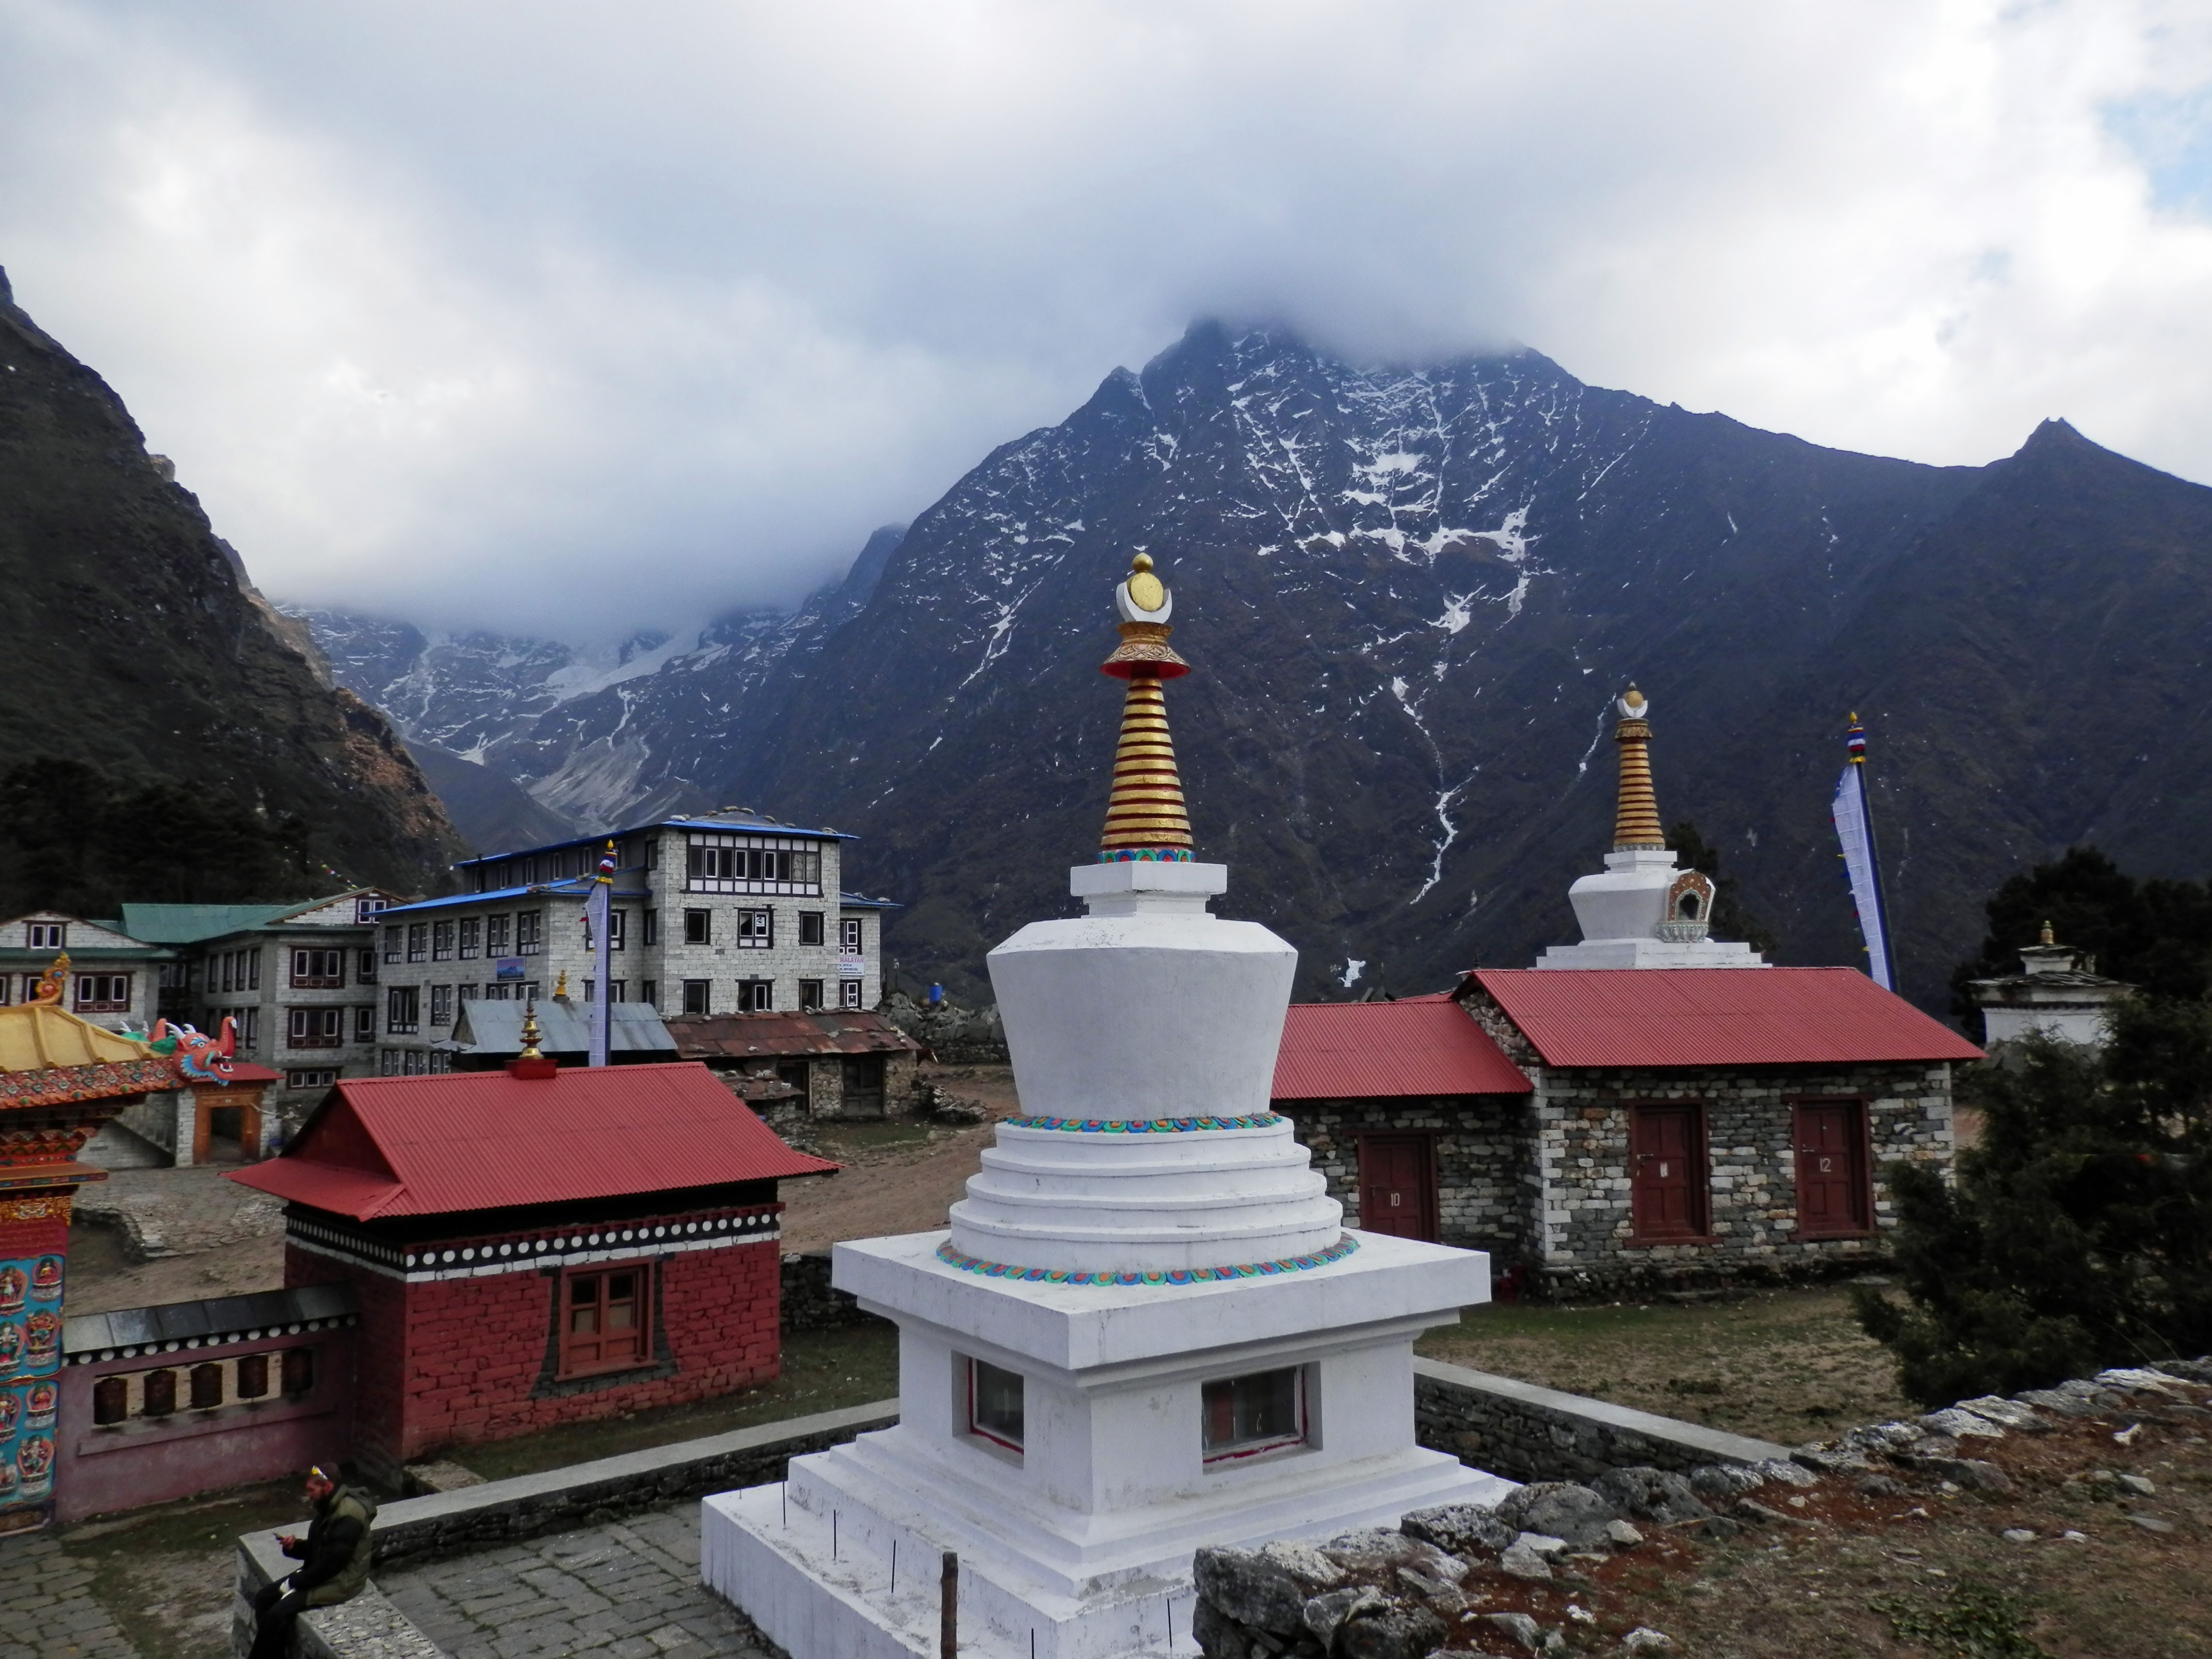 Nepal Trek: The Chorten